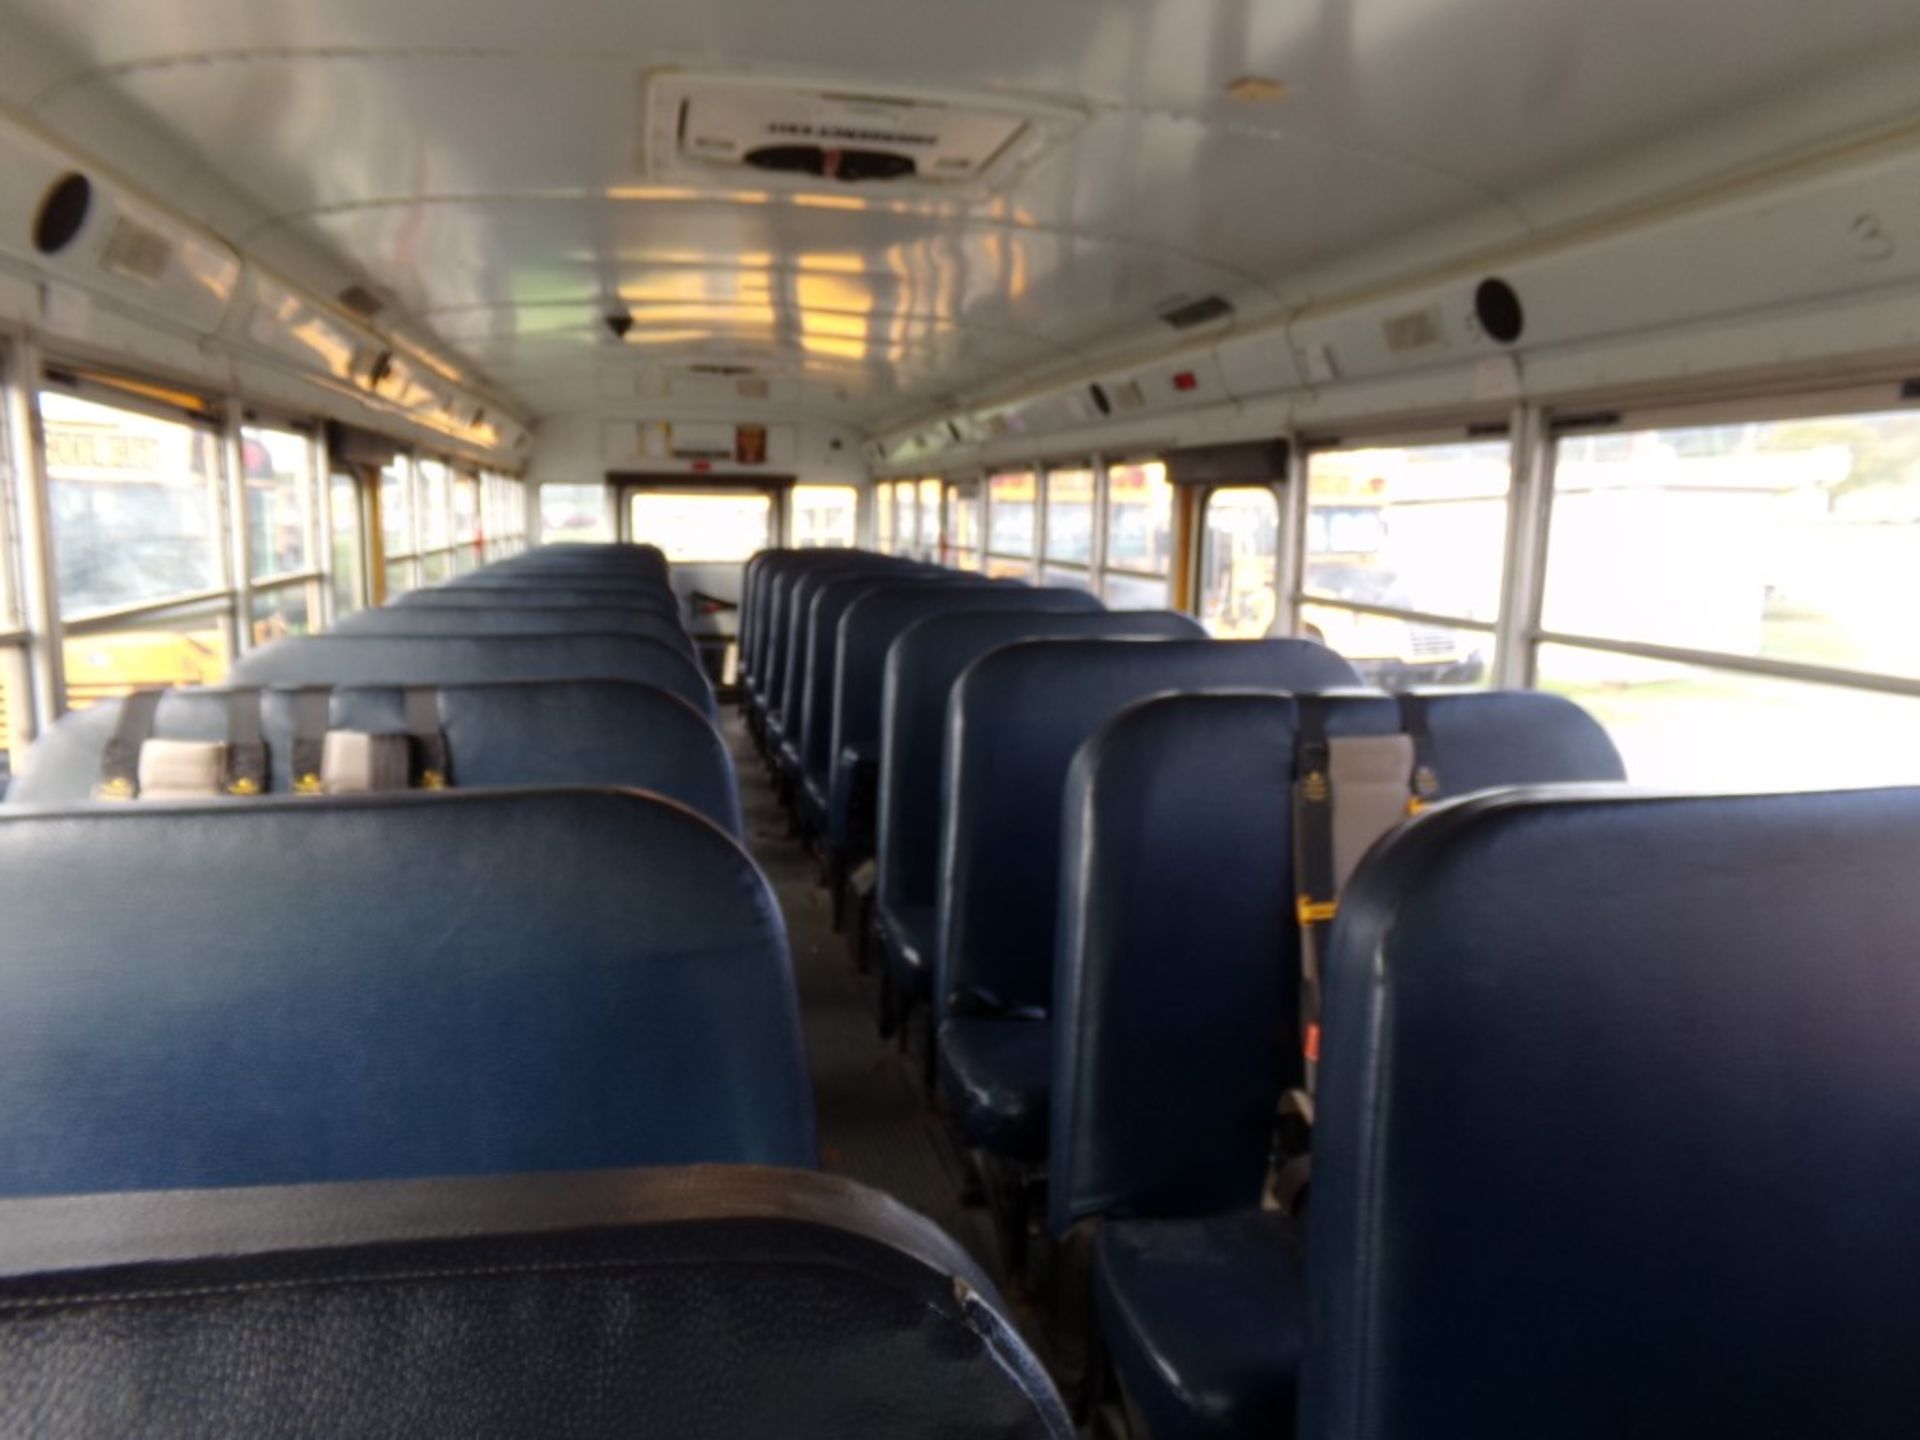 2011 Blue Bird All American School Bus #127, Seats 48A-71C, Auto, 33,000 GVW, 105,173 Miles, VIN#: - Image 8 of 8